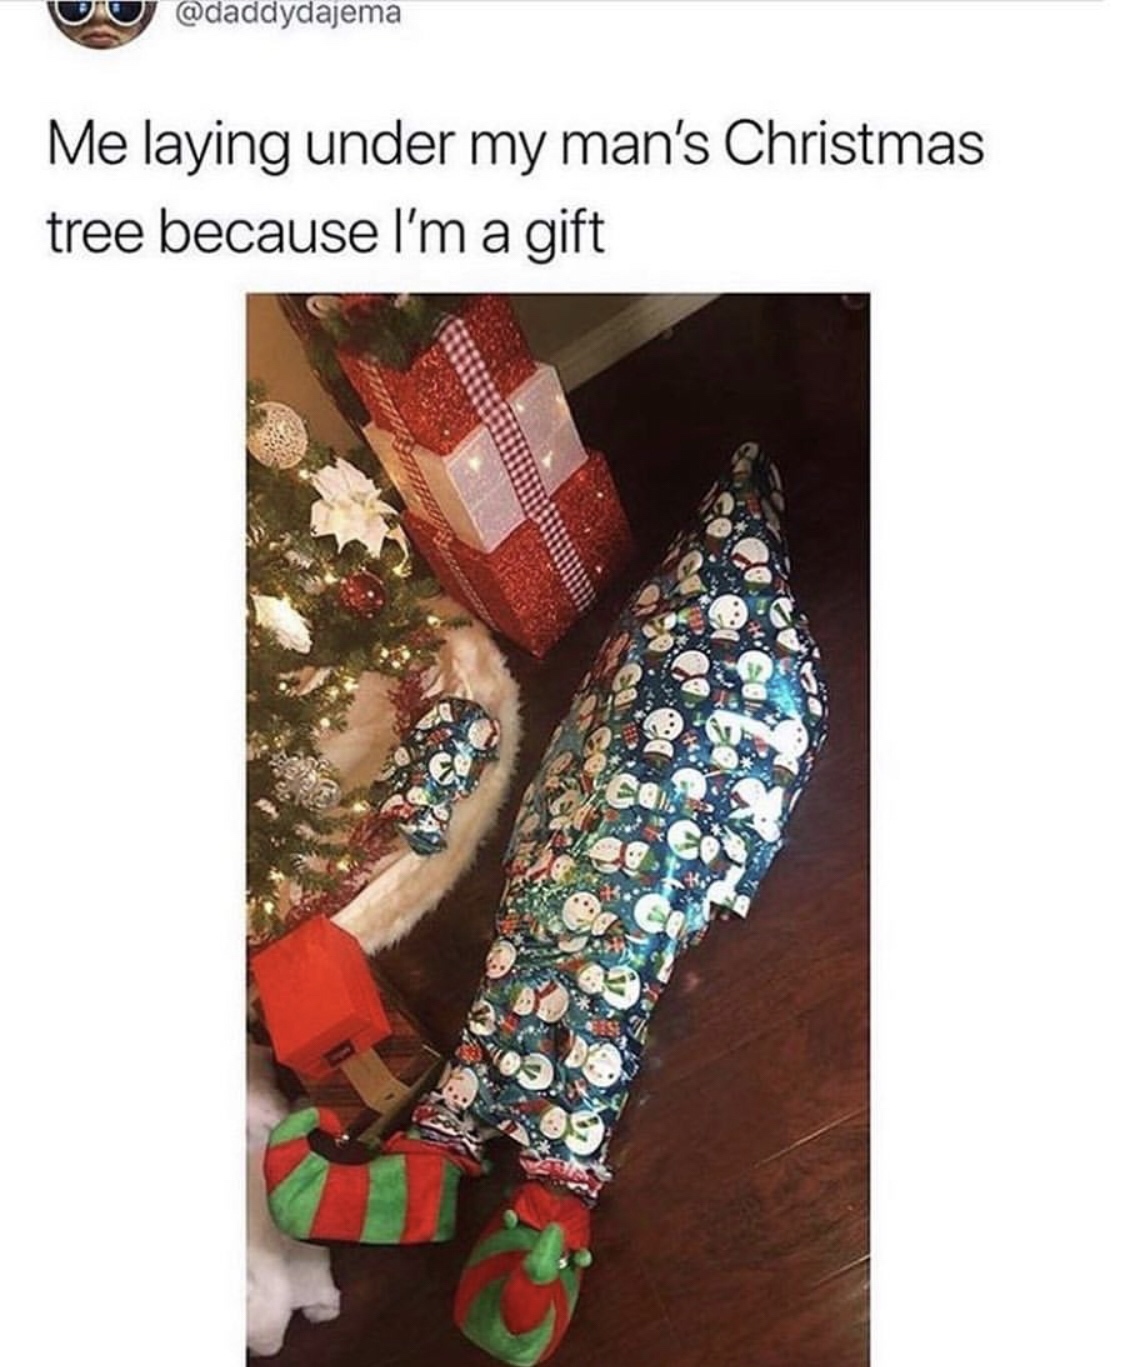 meme - me laying under my man's tree - Do Me laying under my man's Christmas tree because I'm a gift